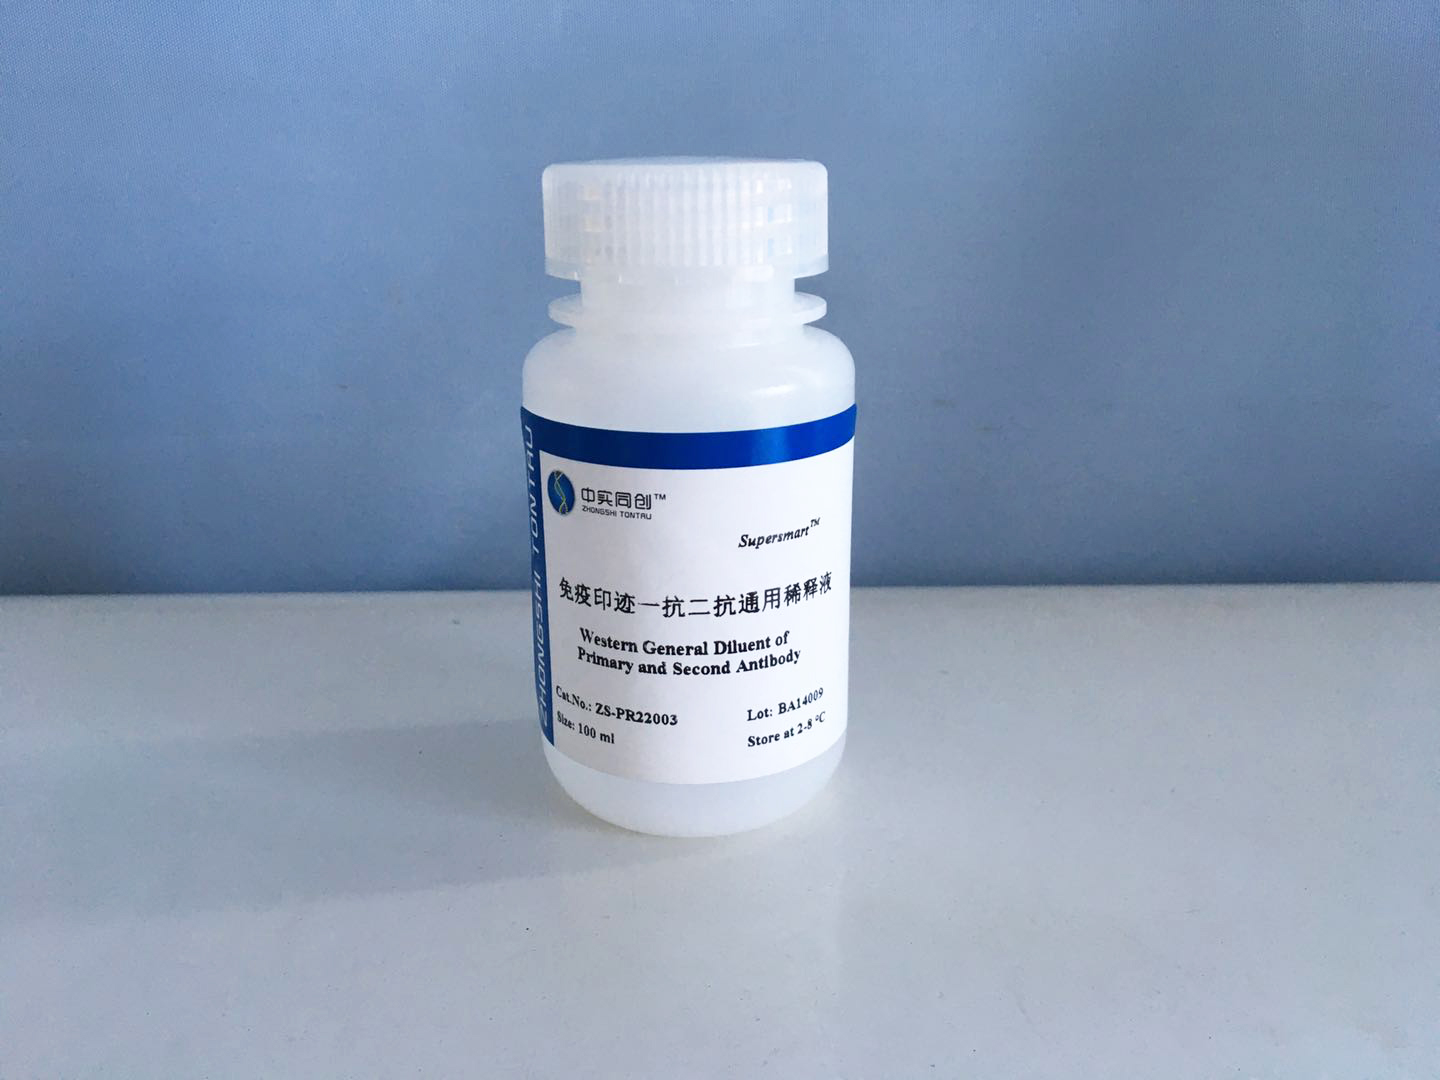 Supersmart 免疫印迹通用型抗体稀释液 (ZS-PR22003)